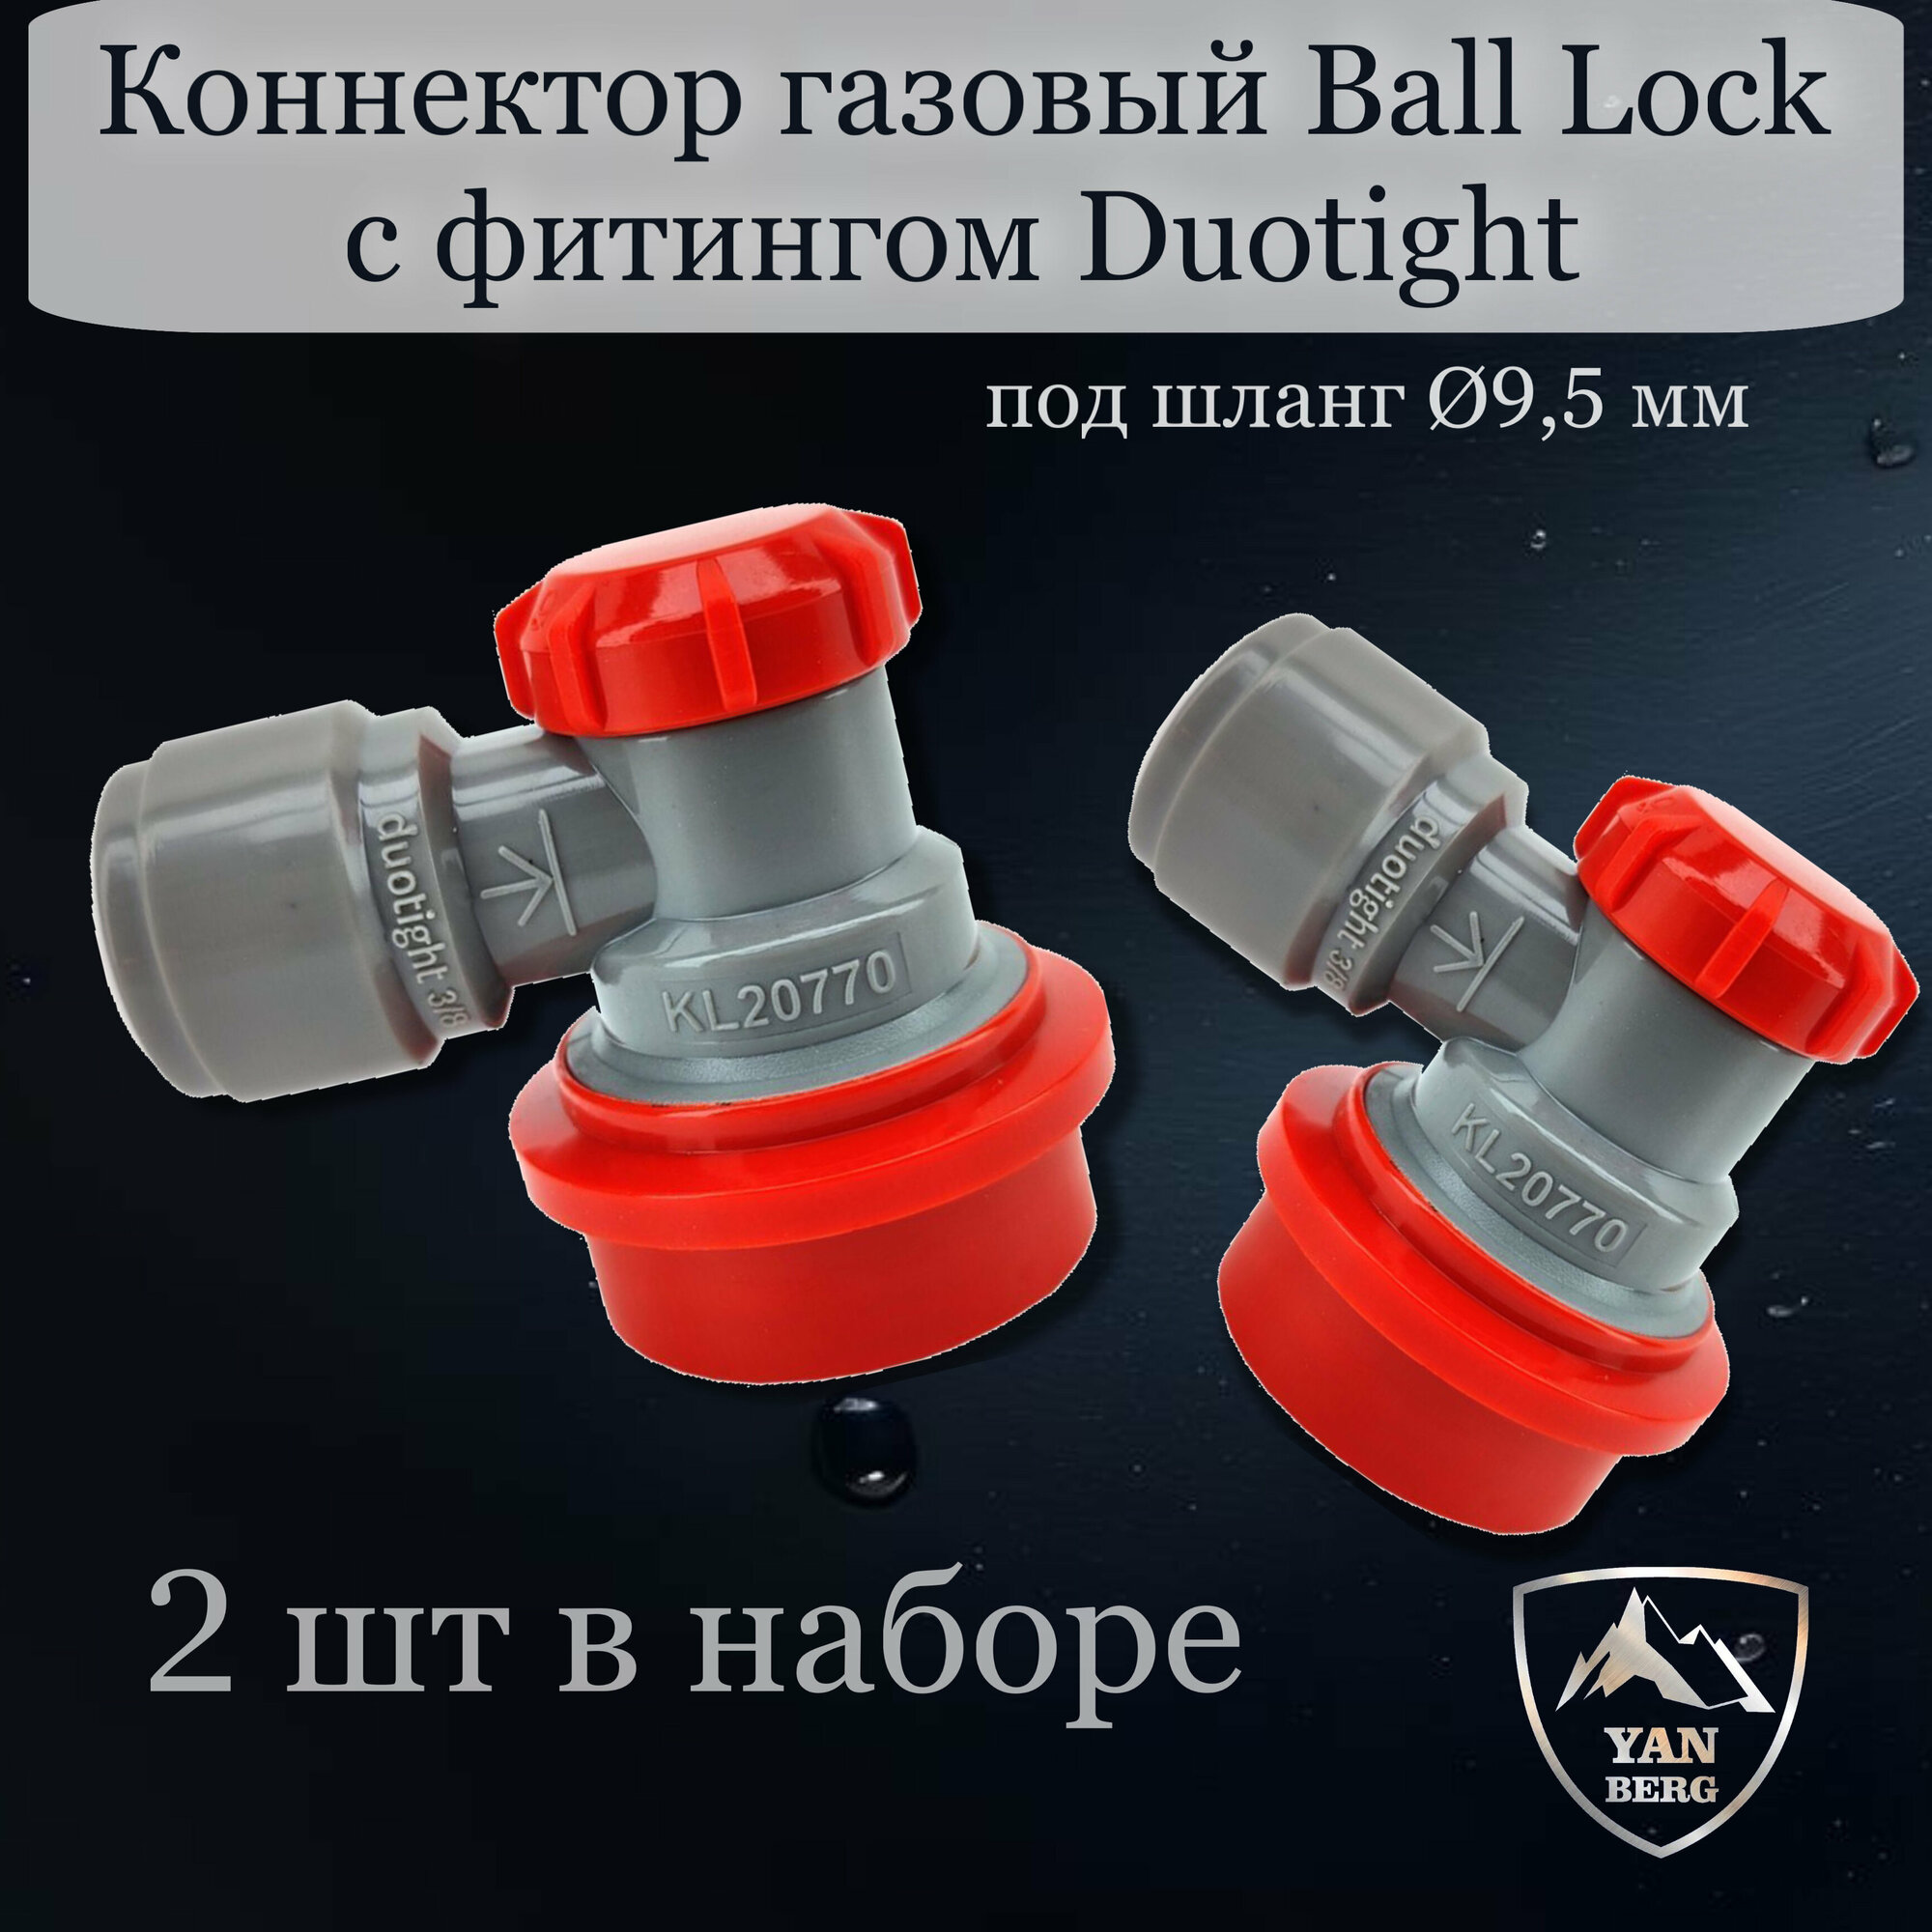 Коннектор газовый Ball Lock с фитингом Duotight под шланг 9,5 мм - 2 штуки